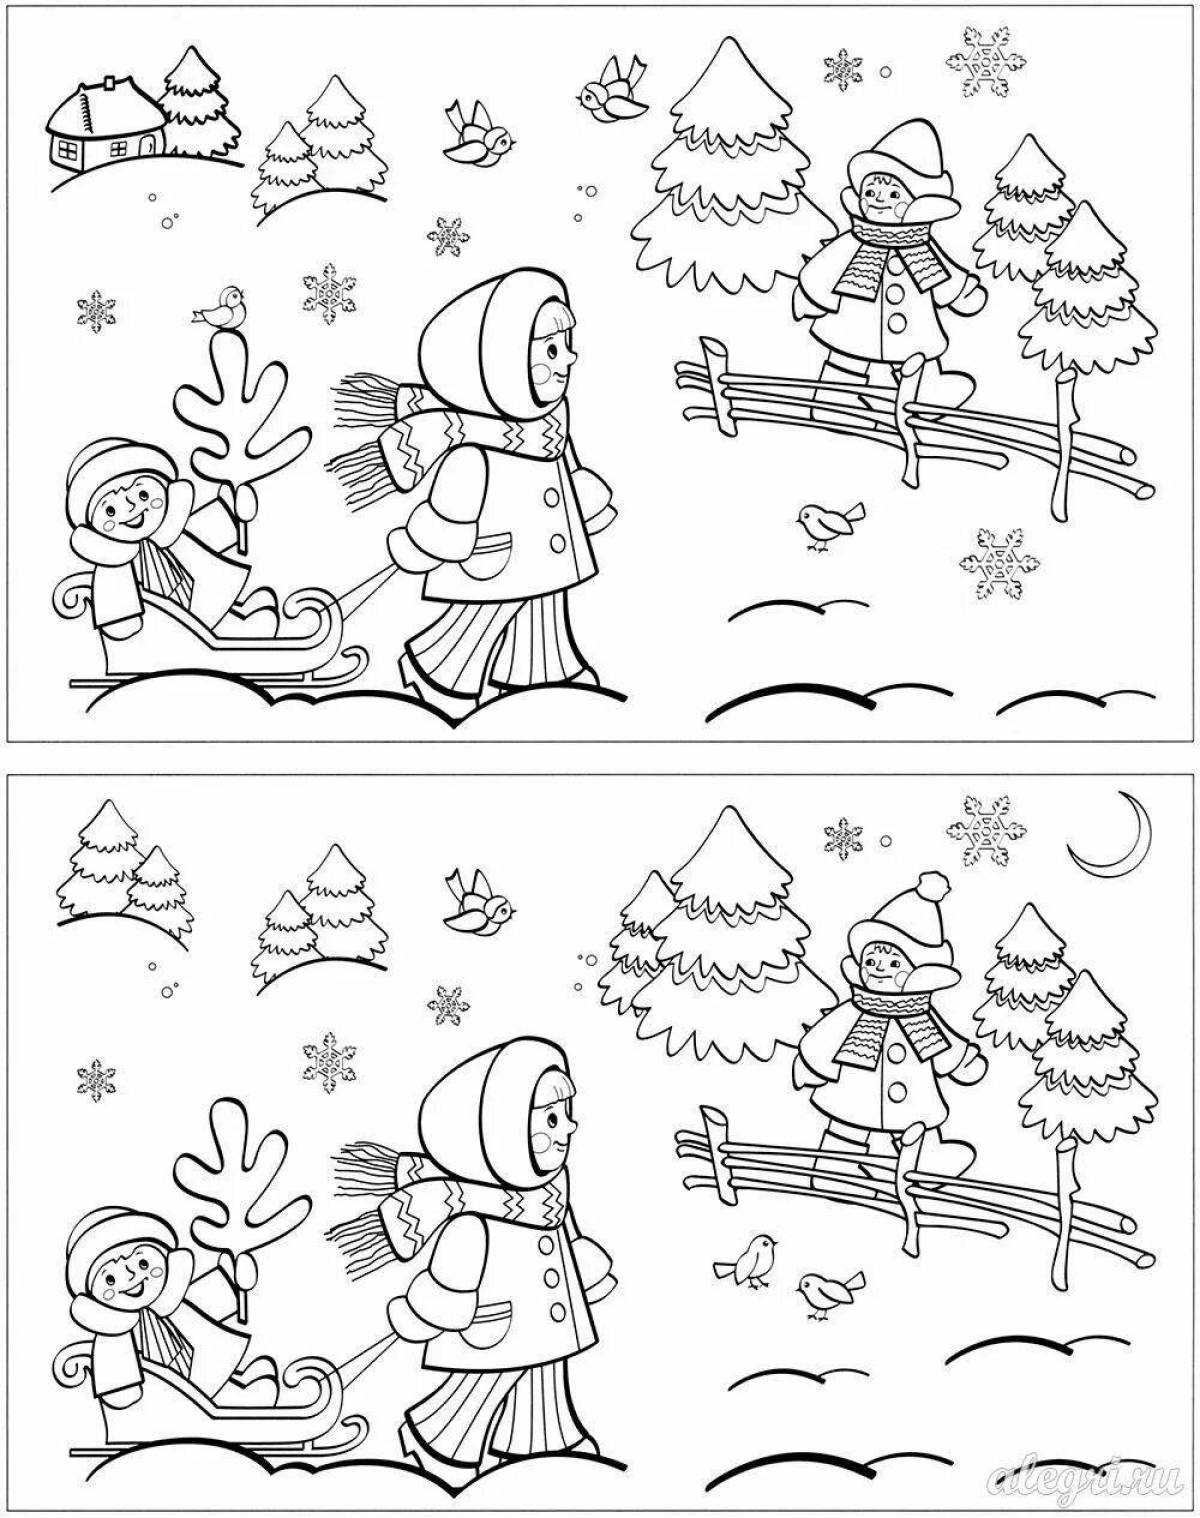 Festive winter coloring for pre-k